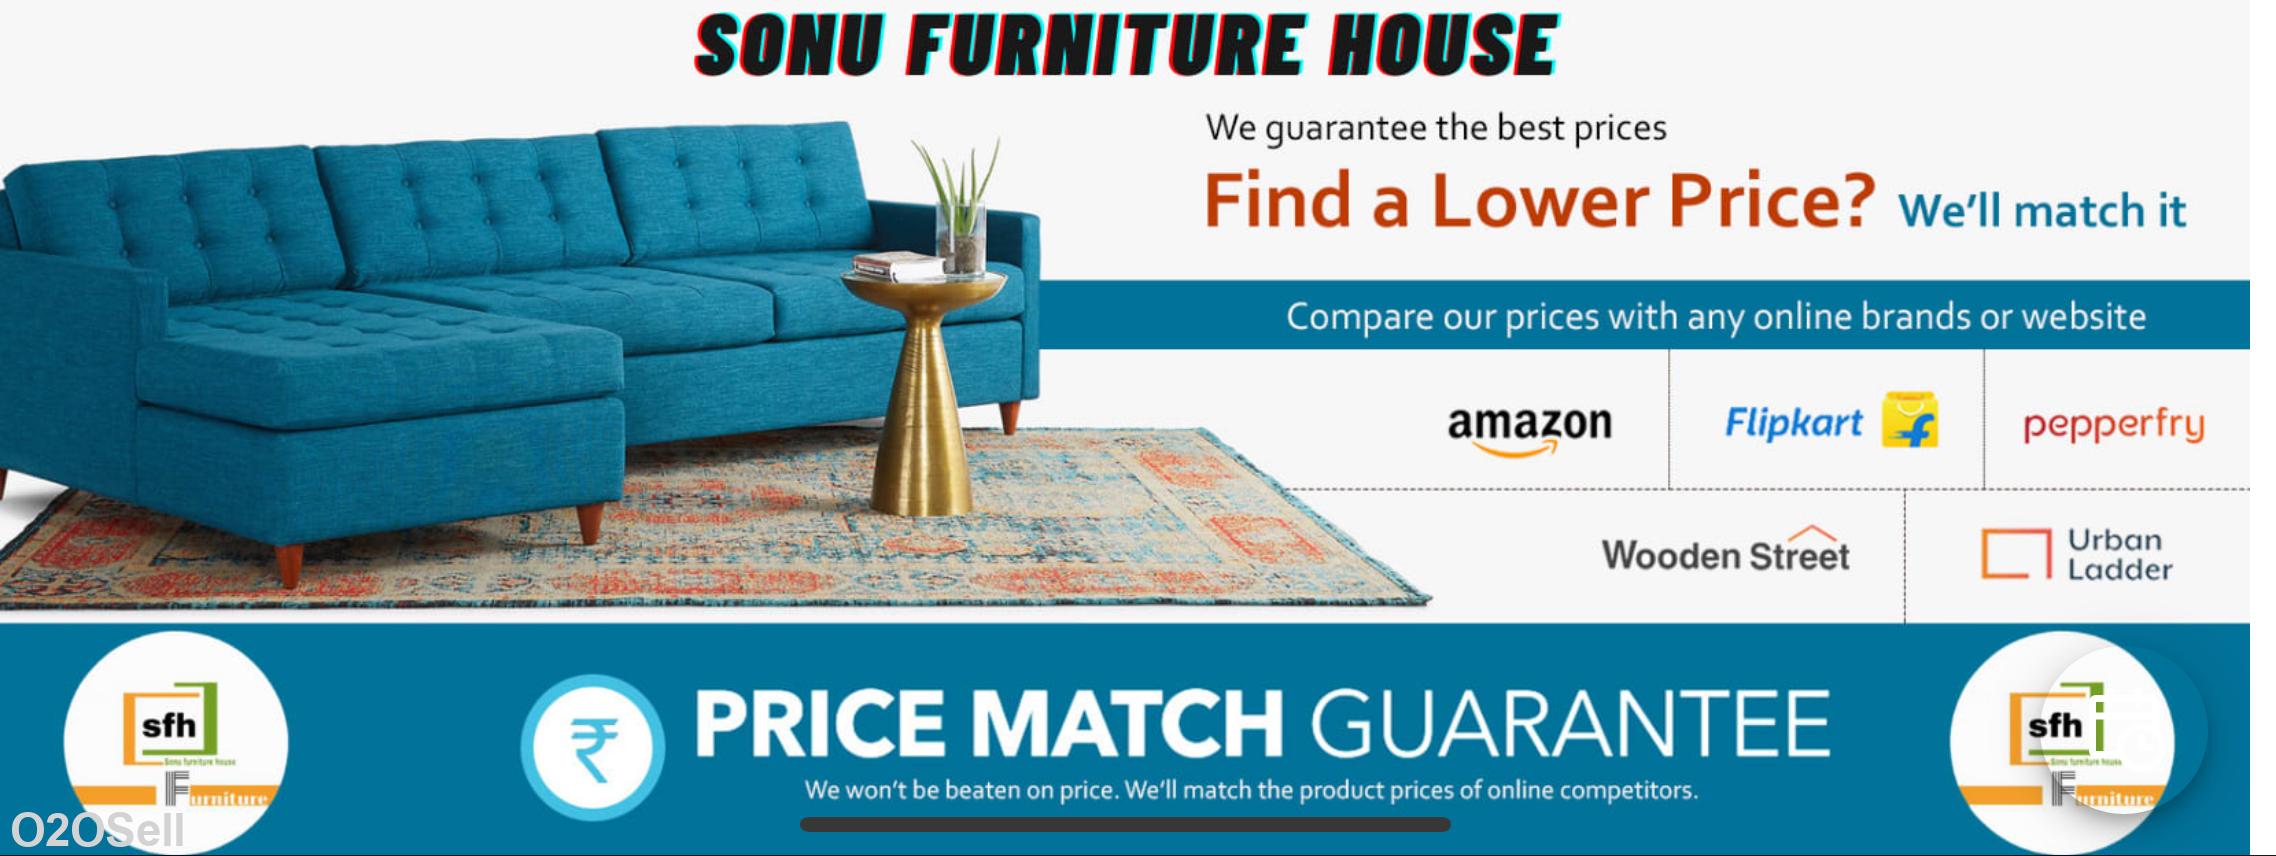 Sonu furniture house Sfh - Cover Image